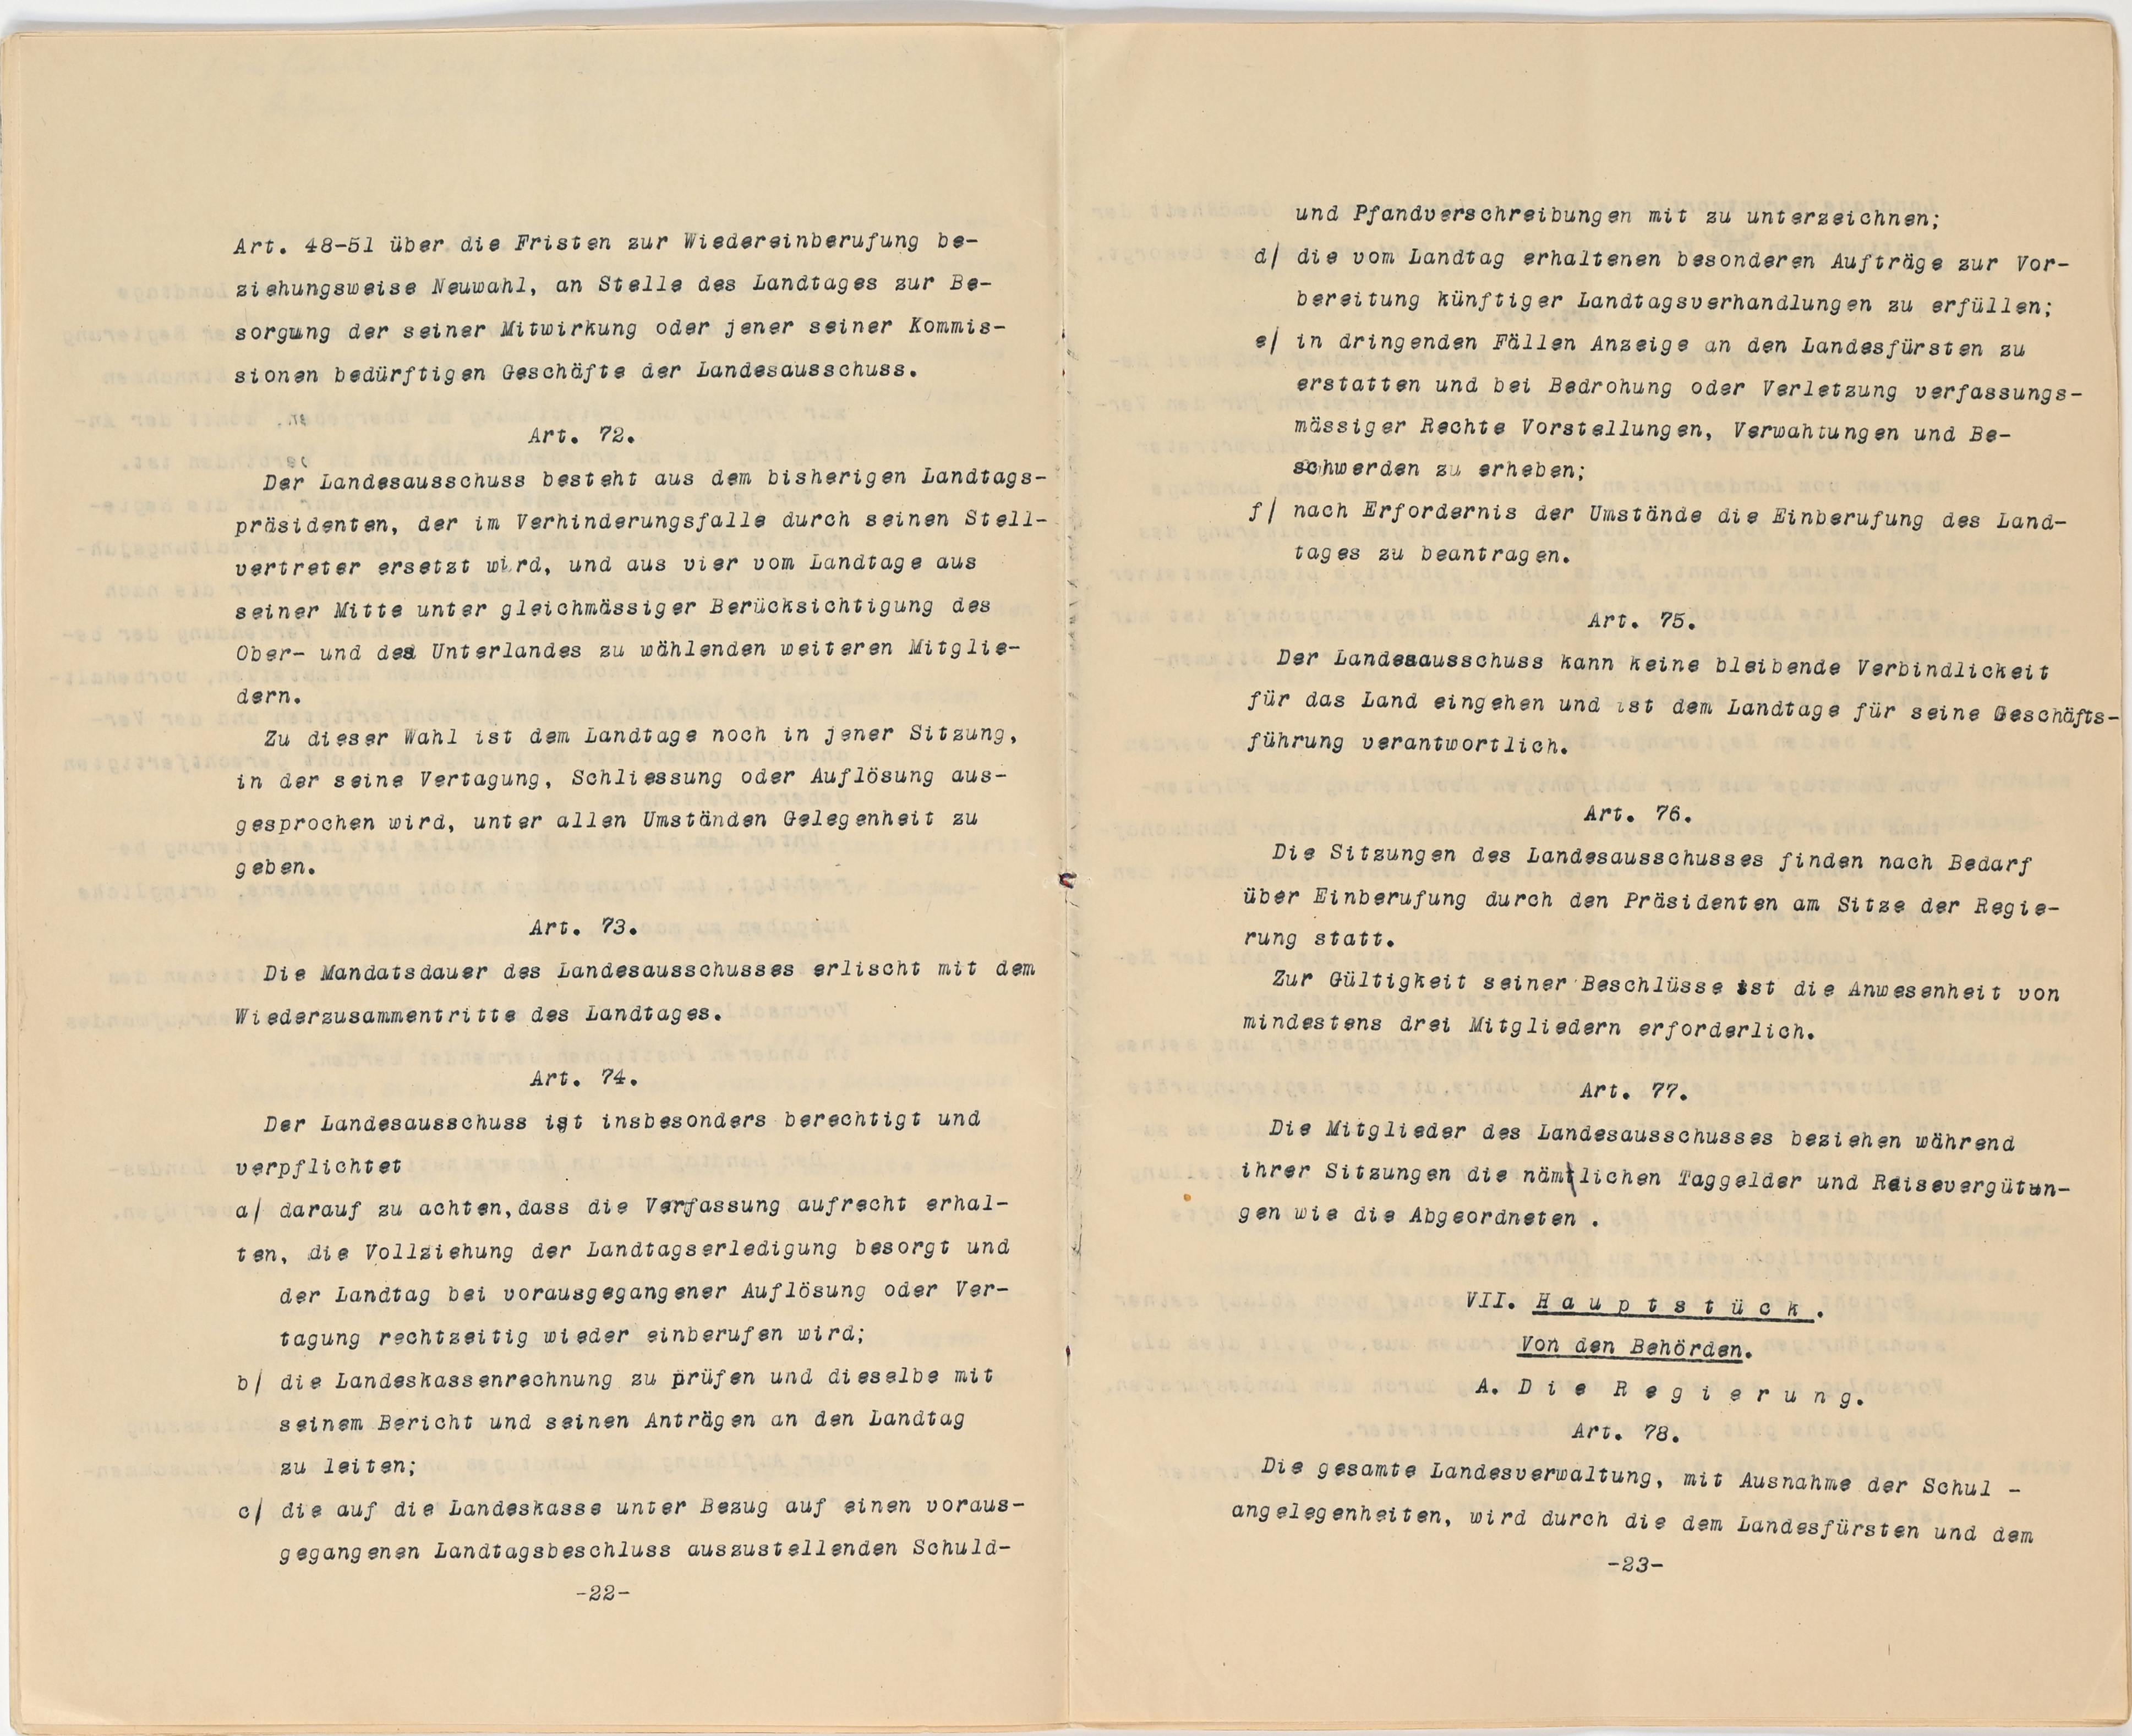 Verfassung 1921 Art. 72 bis Art. 78